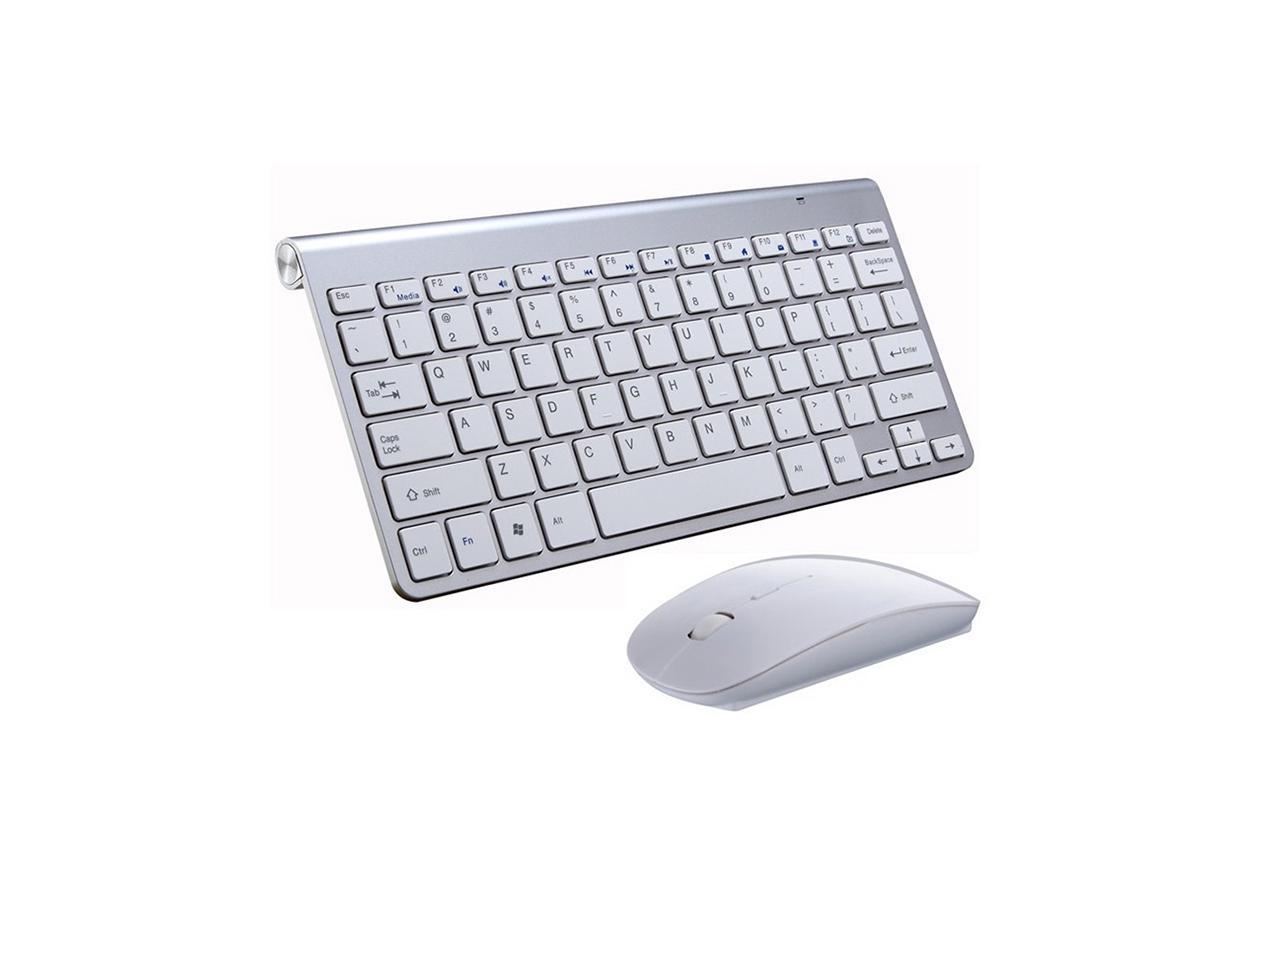 Key Mini Wireless Nano Receiver Keyboard Mouse Combo with 10M Receiving Range Black Wireless Keyboard Mouse,2.4GHz 78 